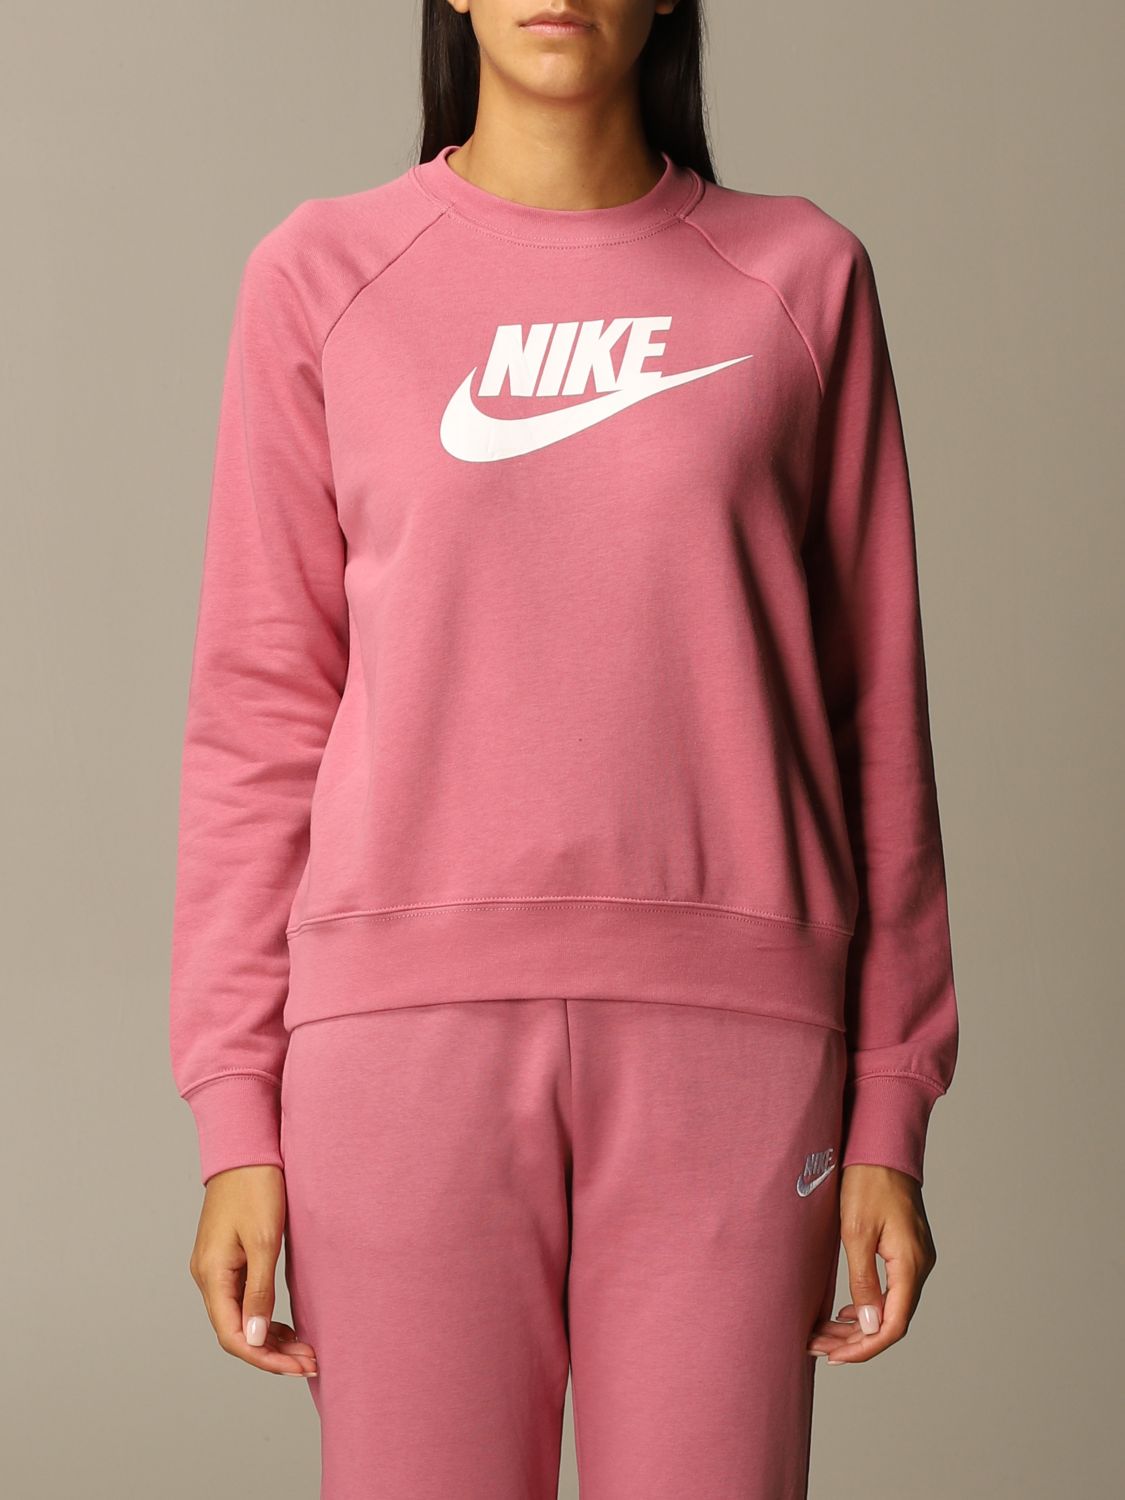 nike sweatshirts womens pink Shop Nike 